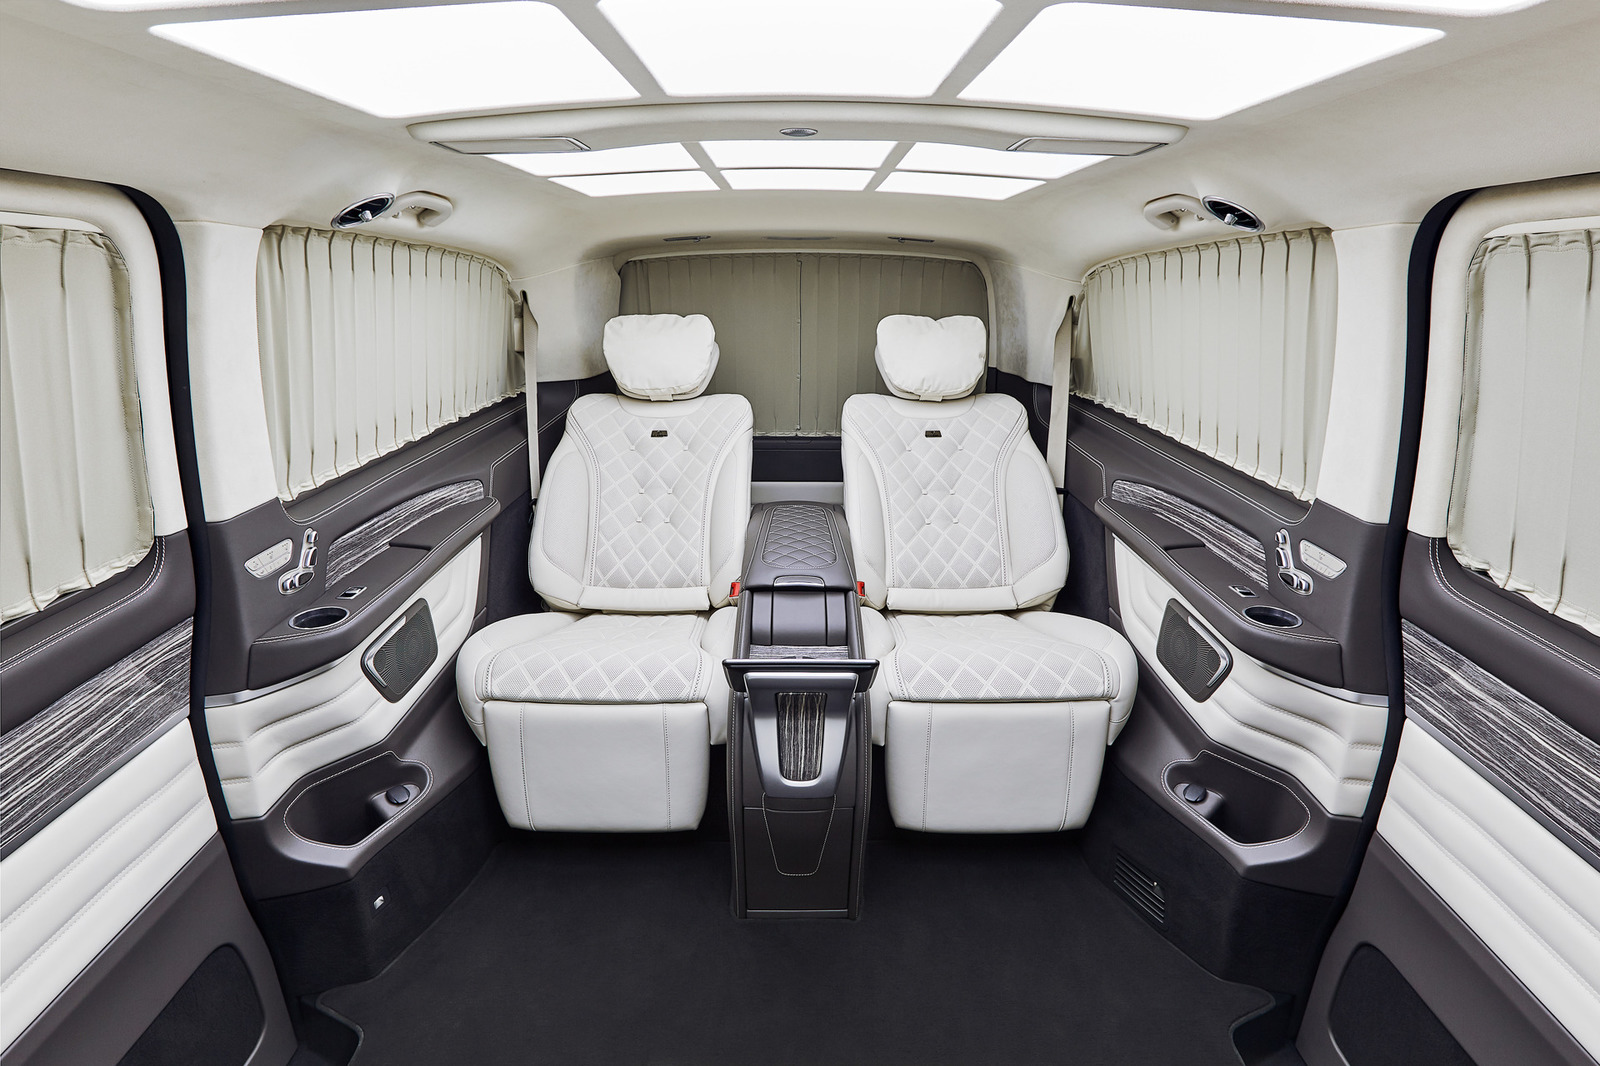 KLASSEN VIP Mercedes-Benz minivan. Luxury Mercedes-Benz V-Class